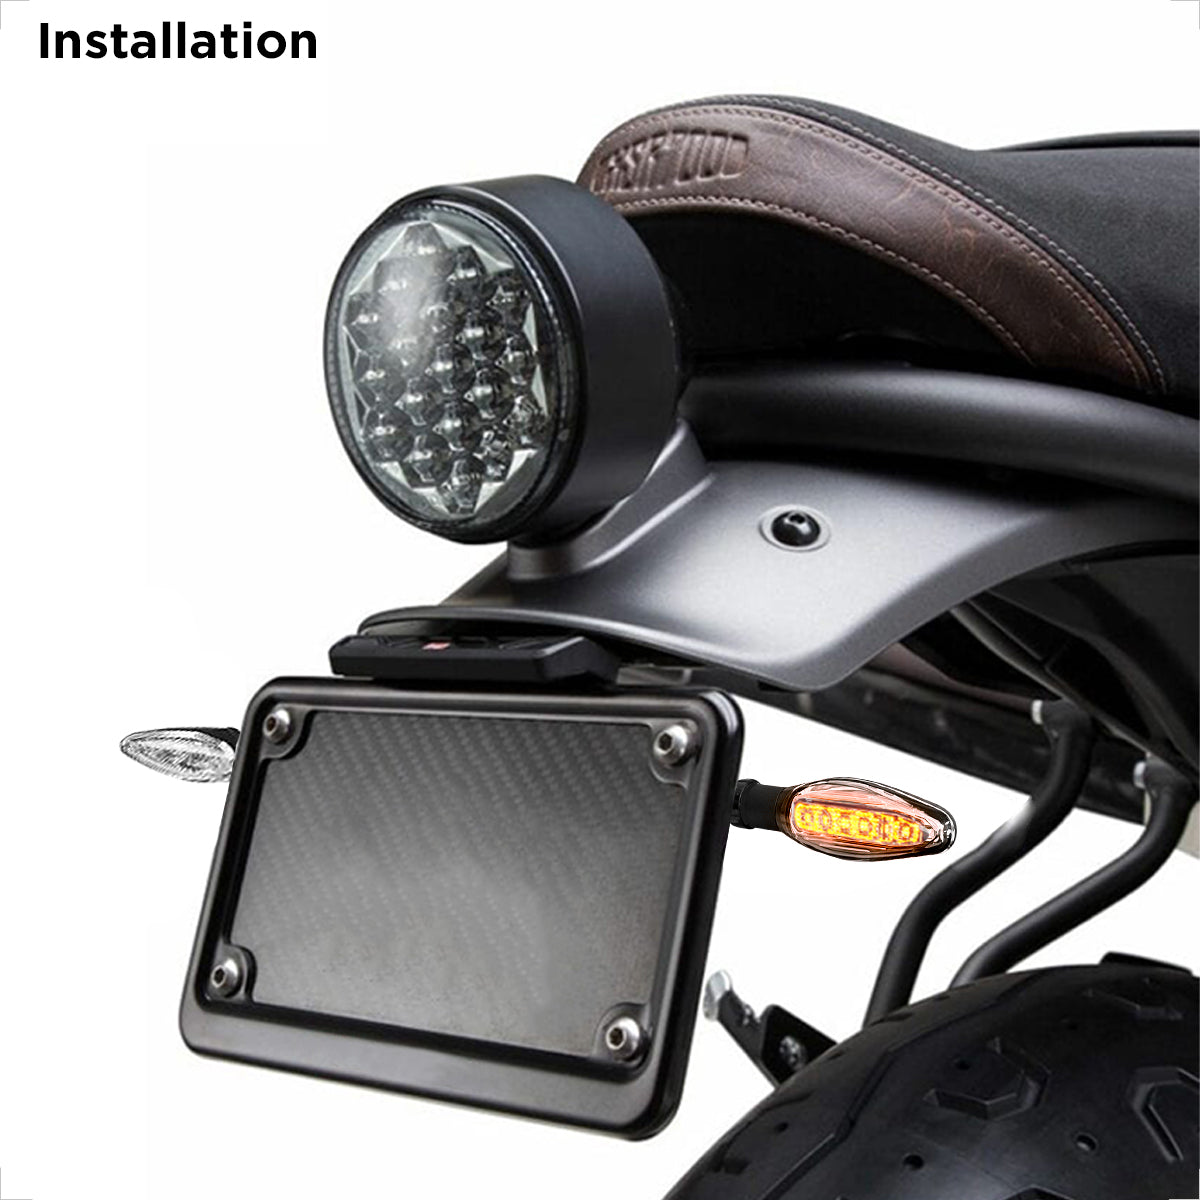 Evermotor Motorrad LED Blinker - 2 Stück, E-geprüft, Wasserdicht, Aluminium.